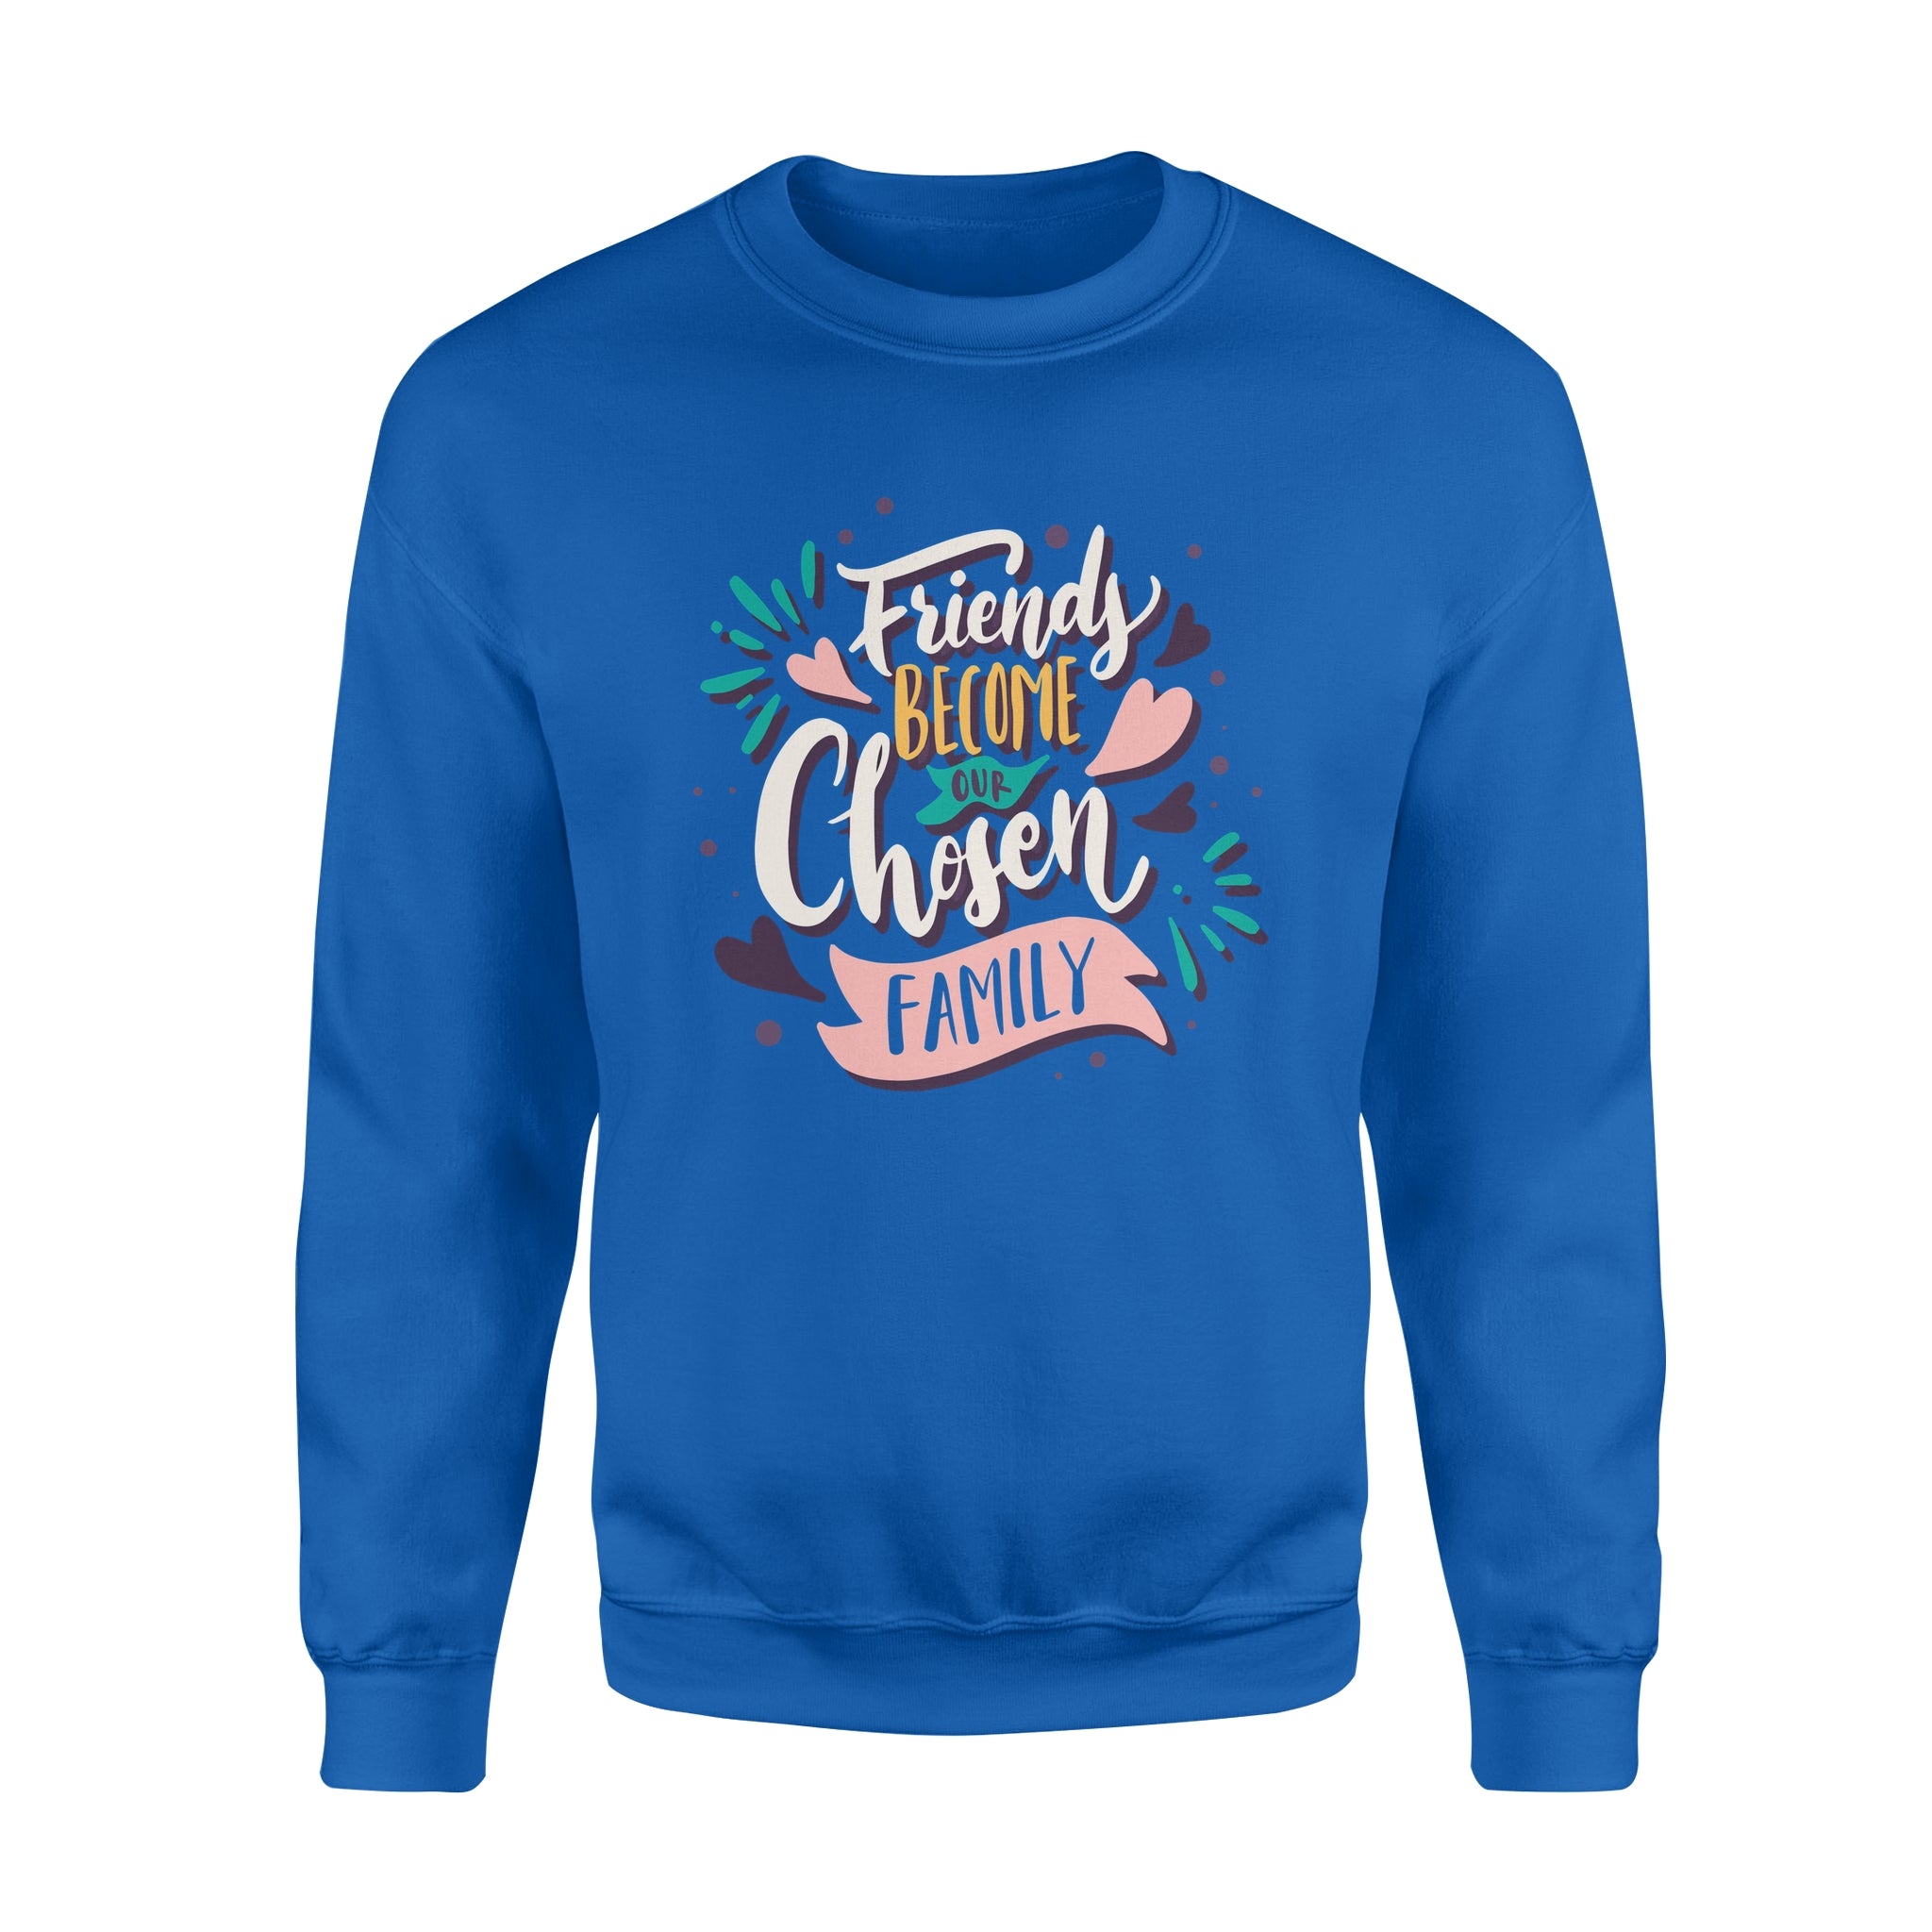 Friend Become Our Chosen Family - Fleece Sweatshirt